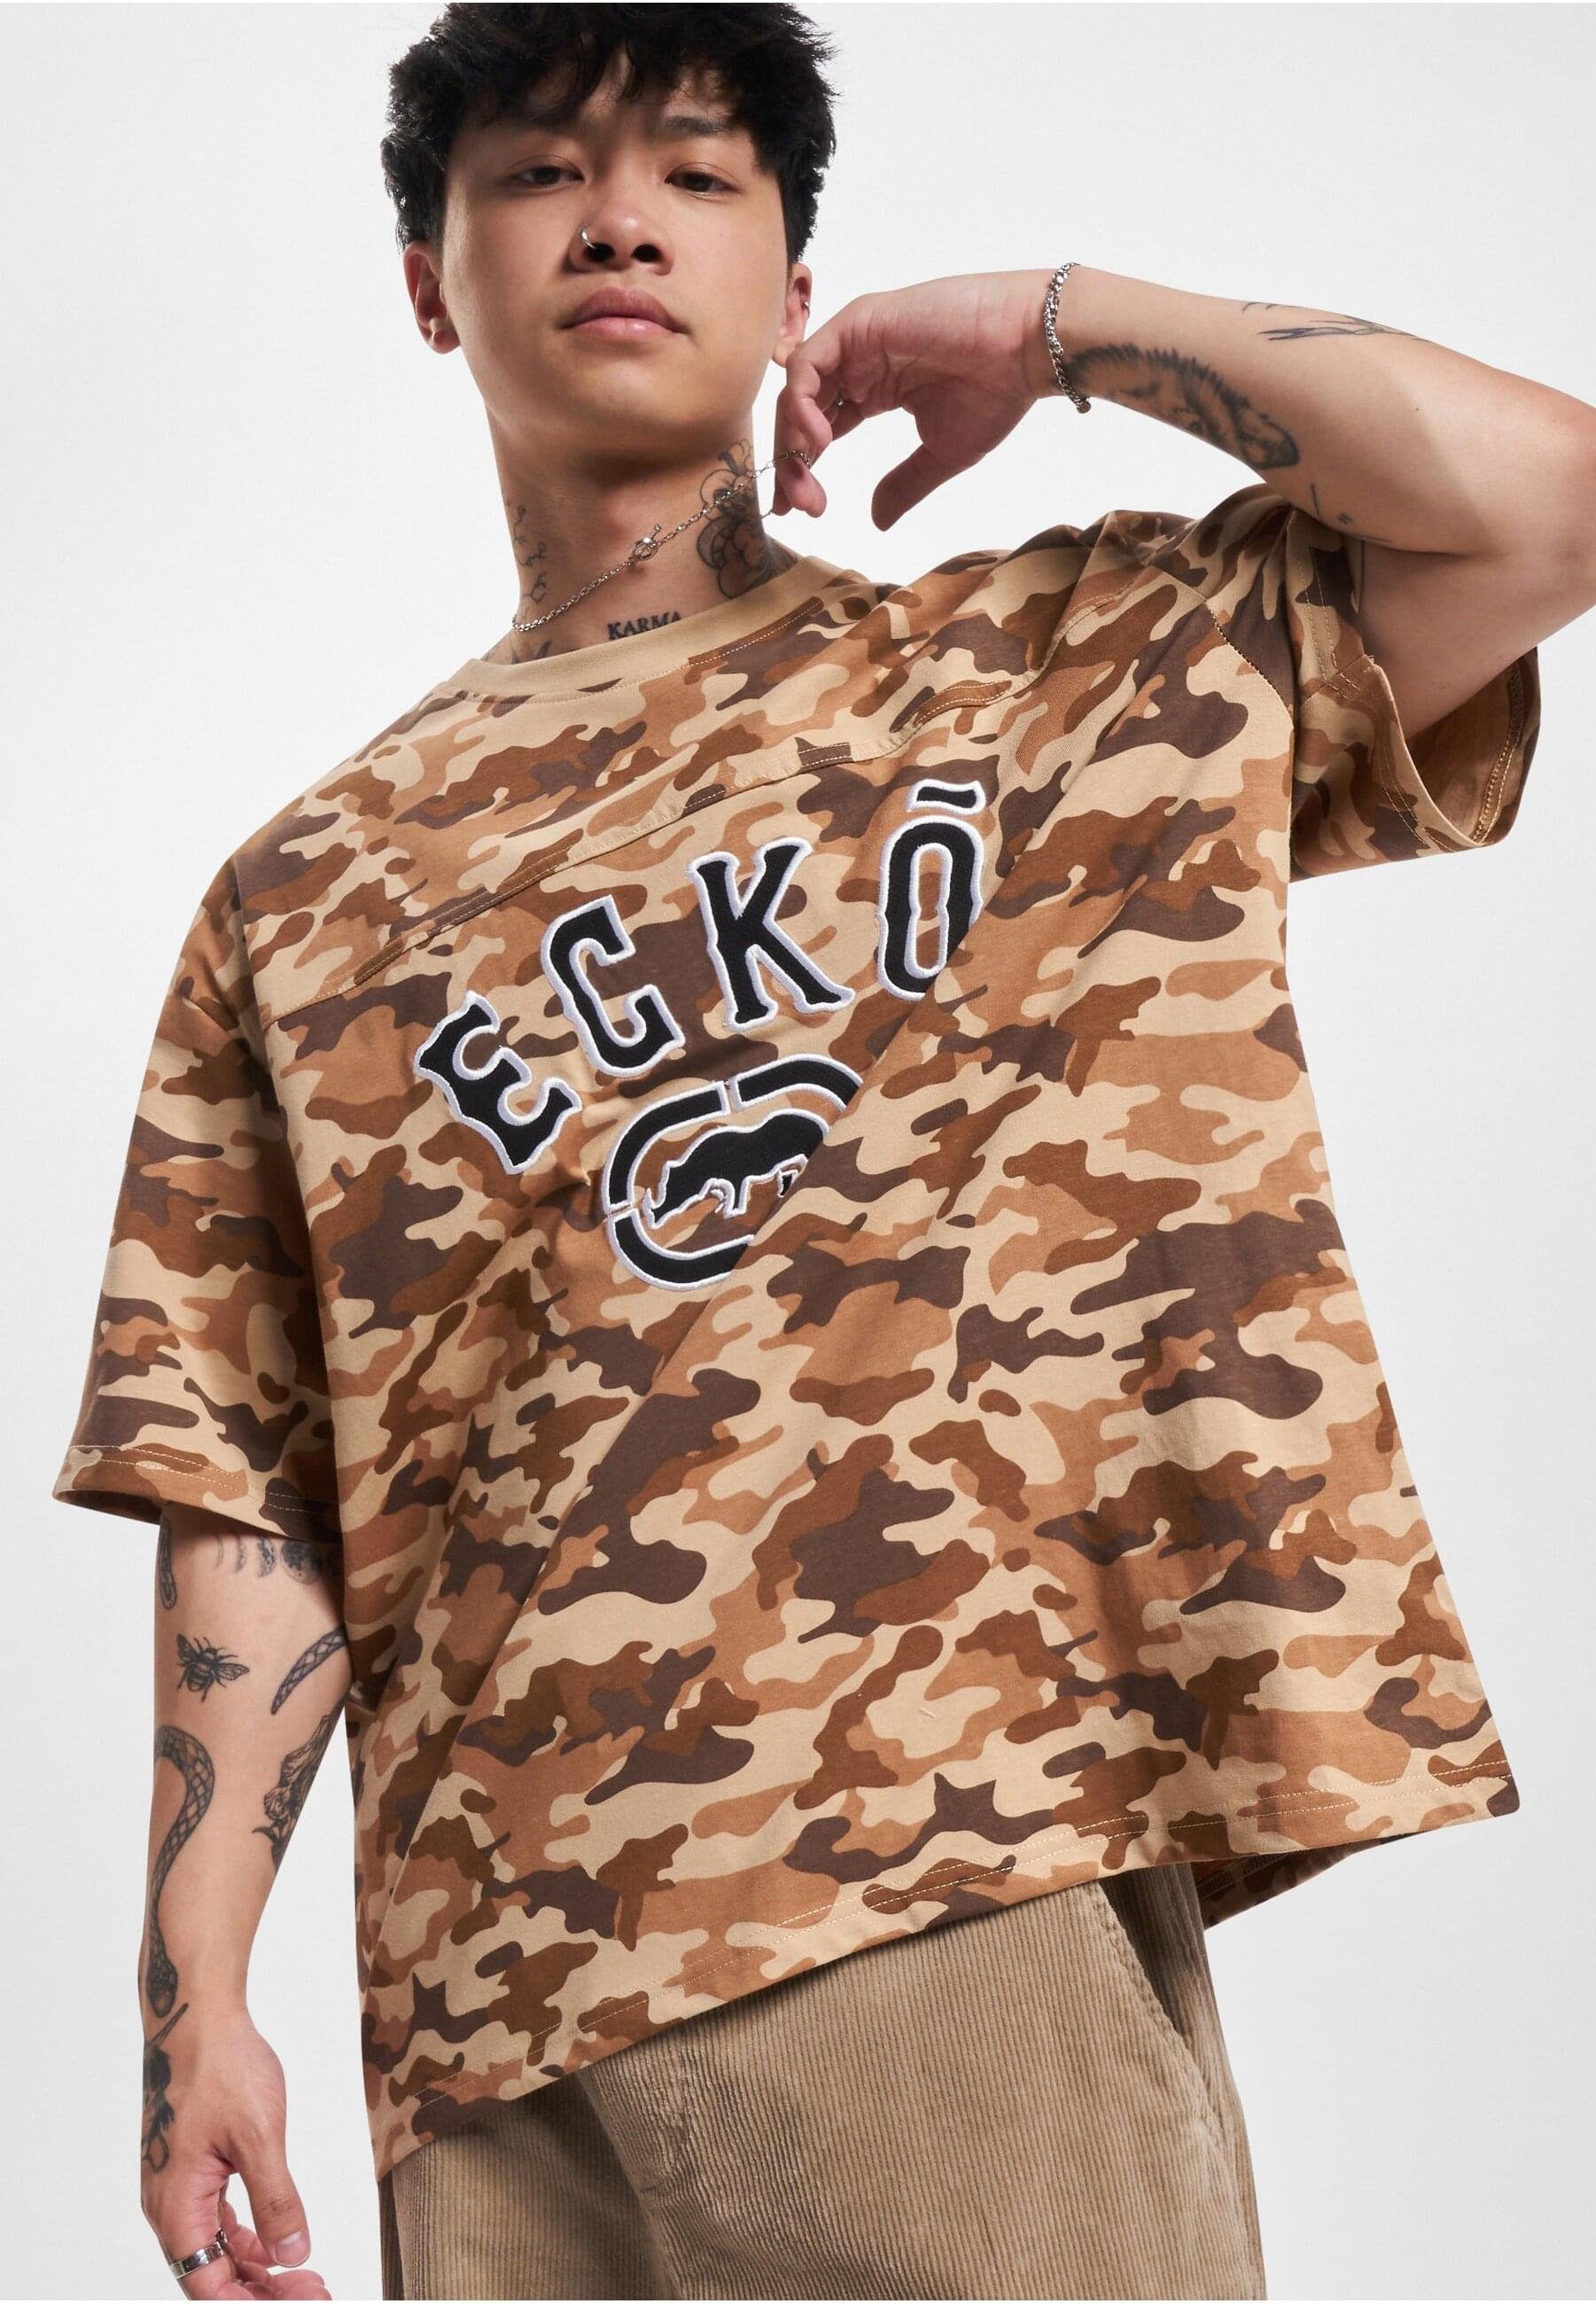 Unltd. (1-tlg) Tshirt BBall Ecko Herren camouflage/camel/brown Unltd. Ecko T-Shirt